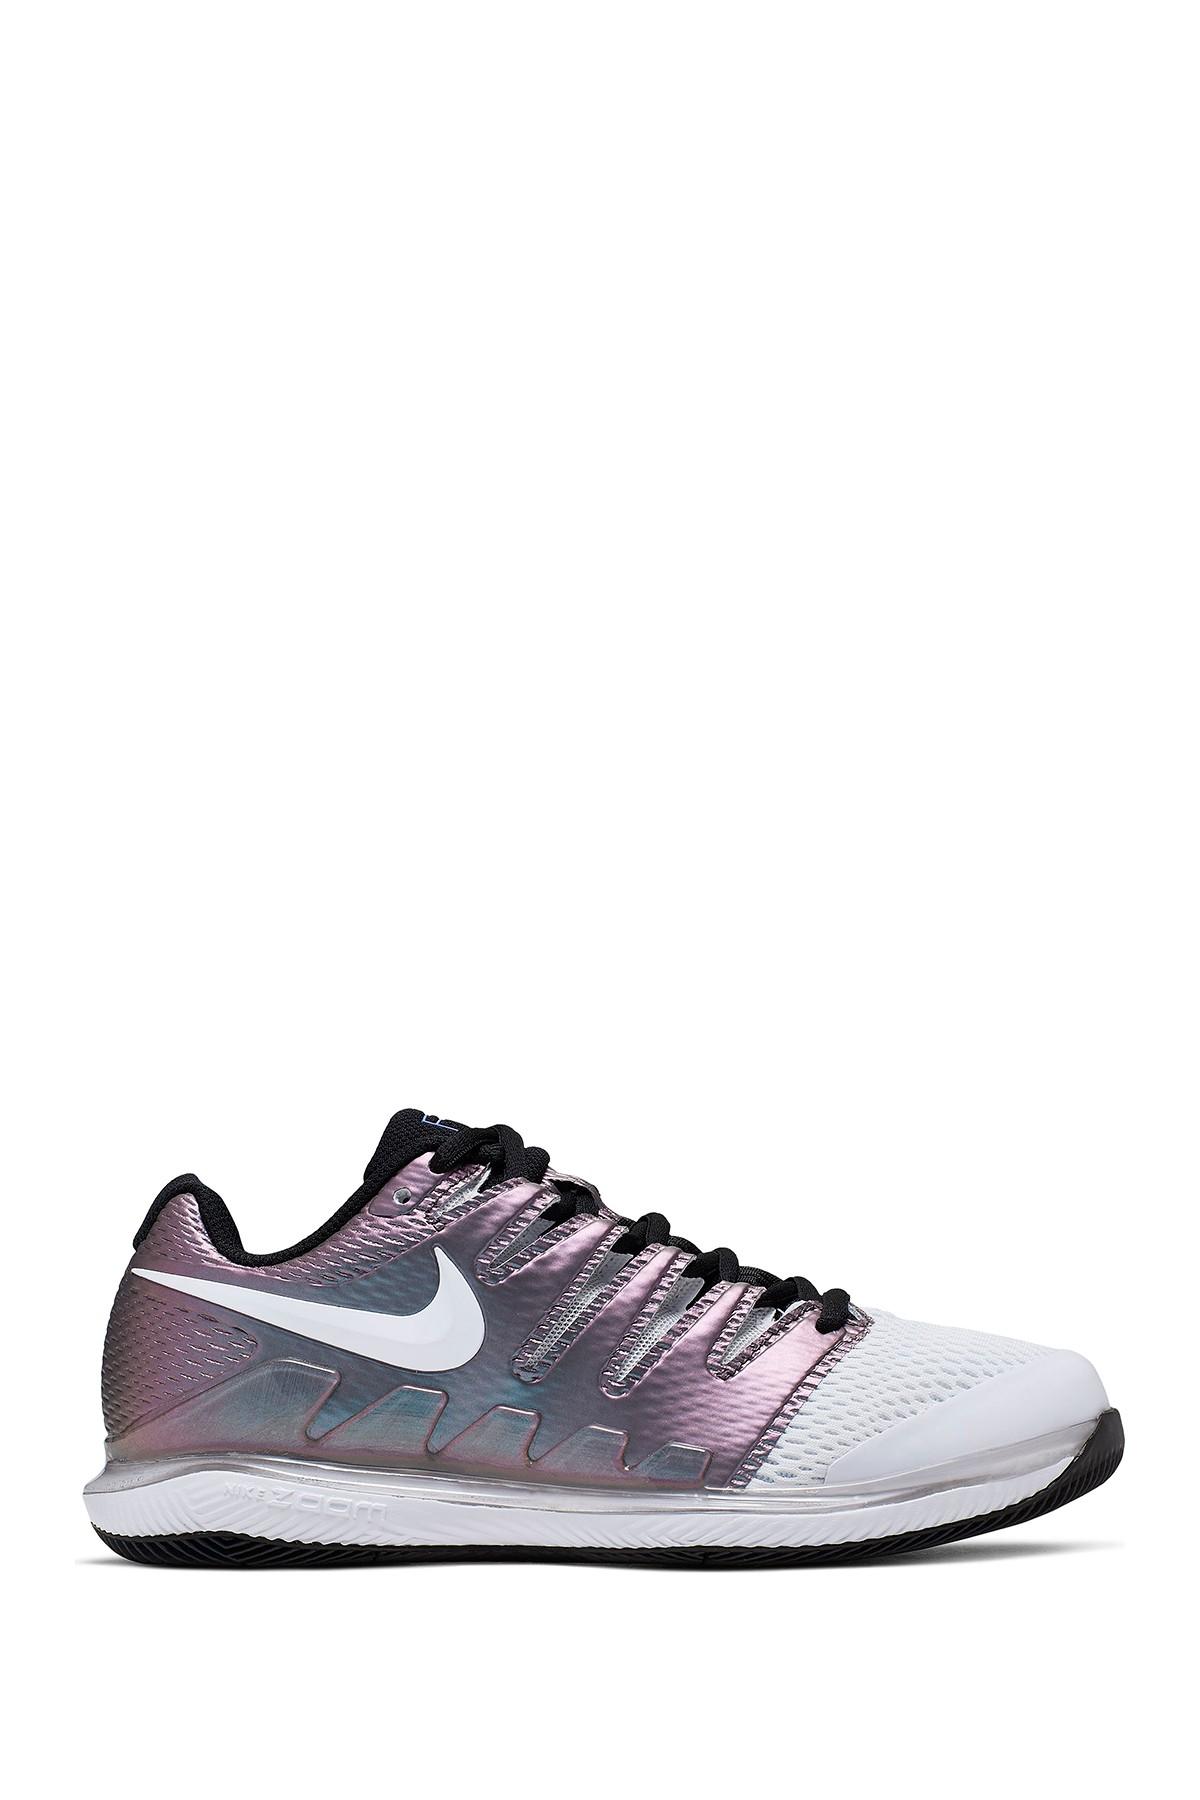 Nike Air Zoom Vapor Tennis Shoes | Lyst